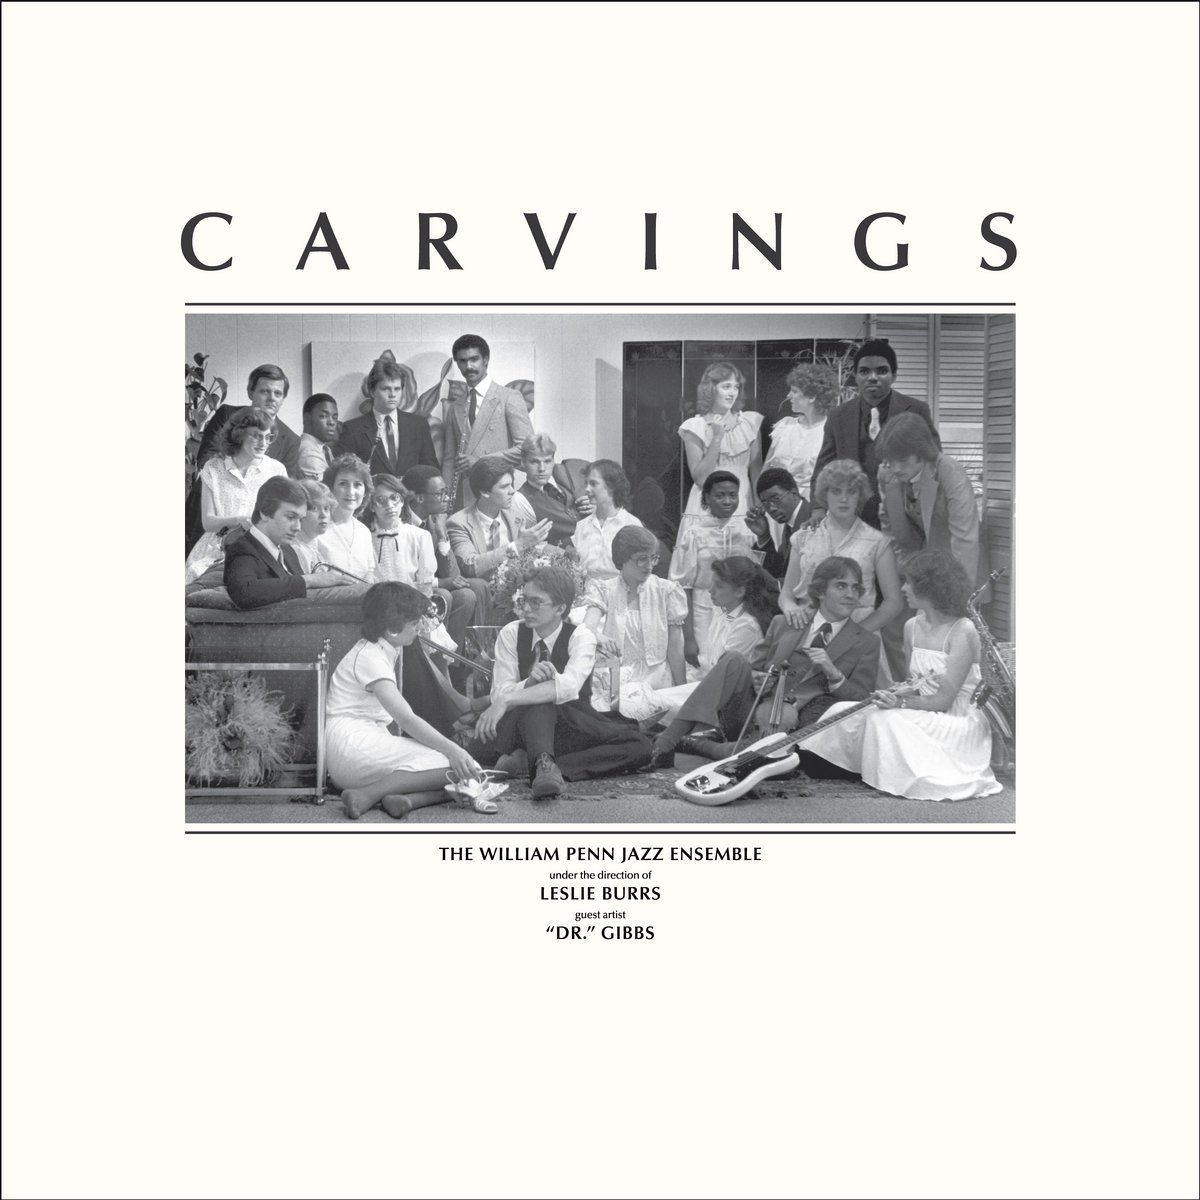 The William Penn Jazz Ensemble - Carvings (Libreville Records LVLP-2109 - 2023)